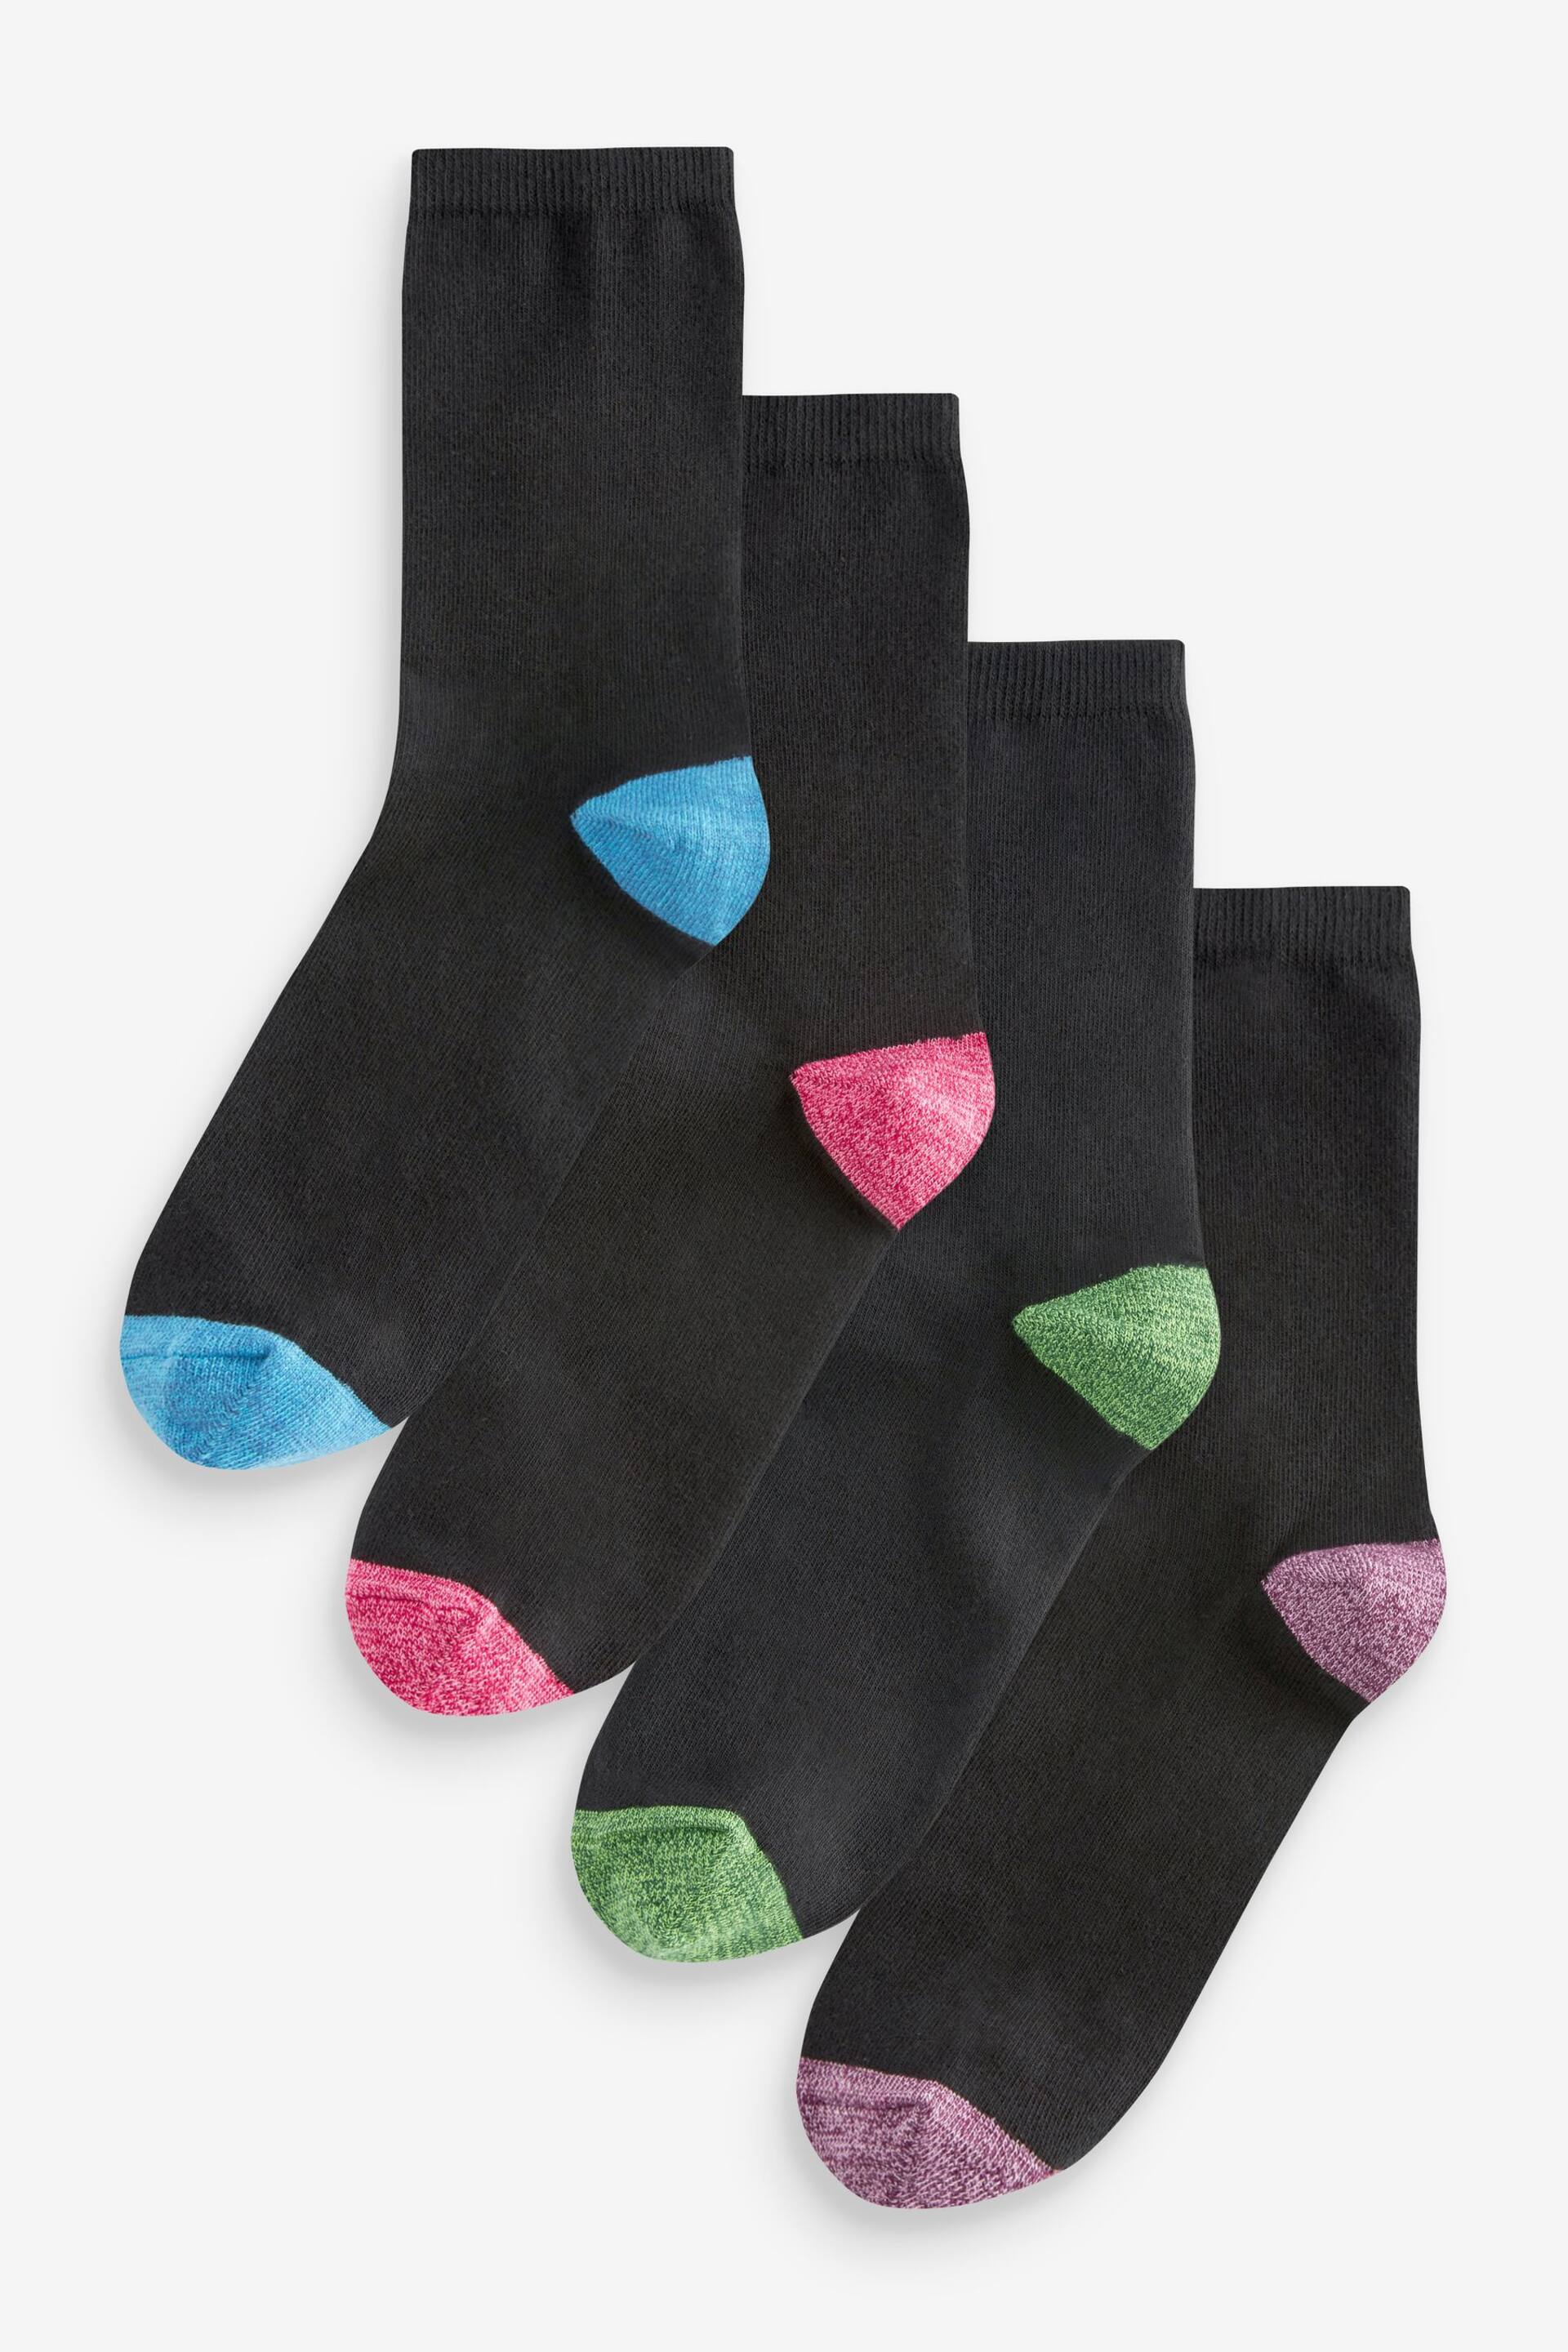 Black Ankle Socks 4 Pack - Image 1 of 5